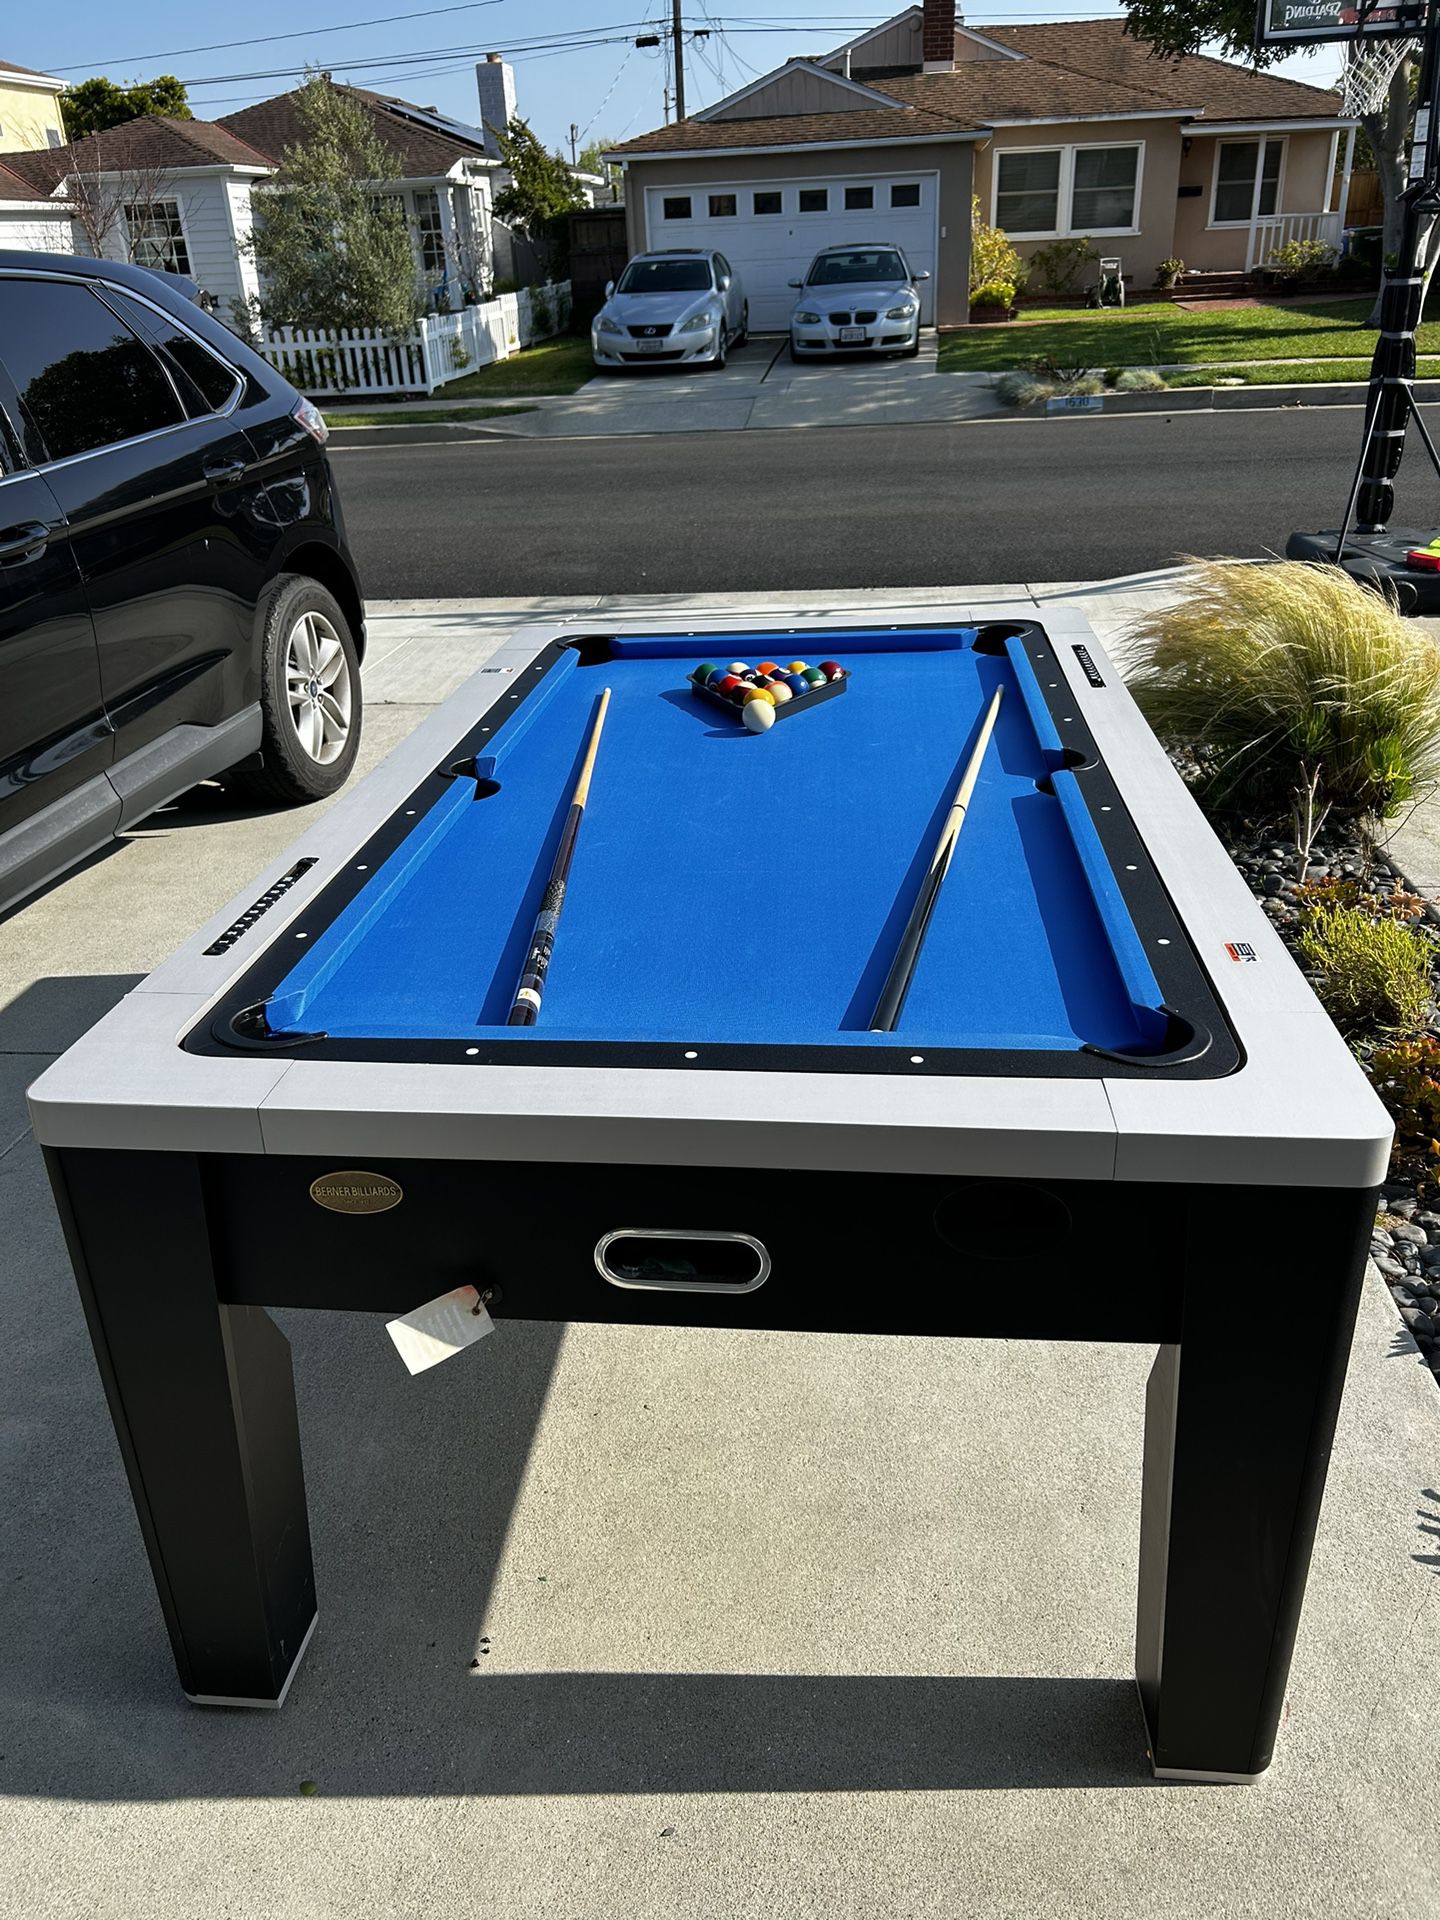 Pool Table / Ping Pong / Air Hockey + More